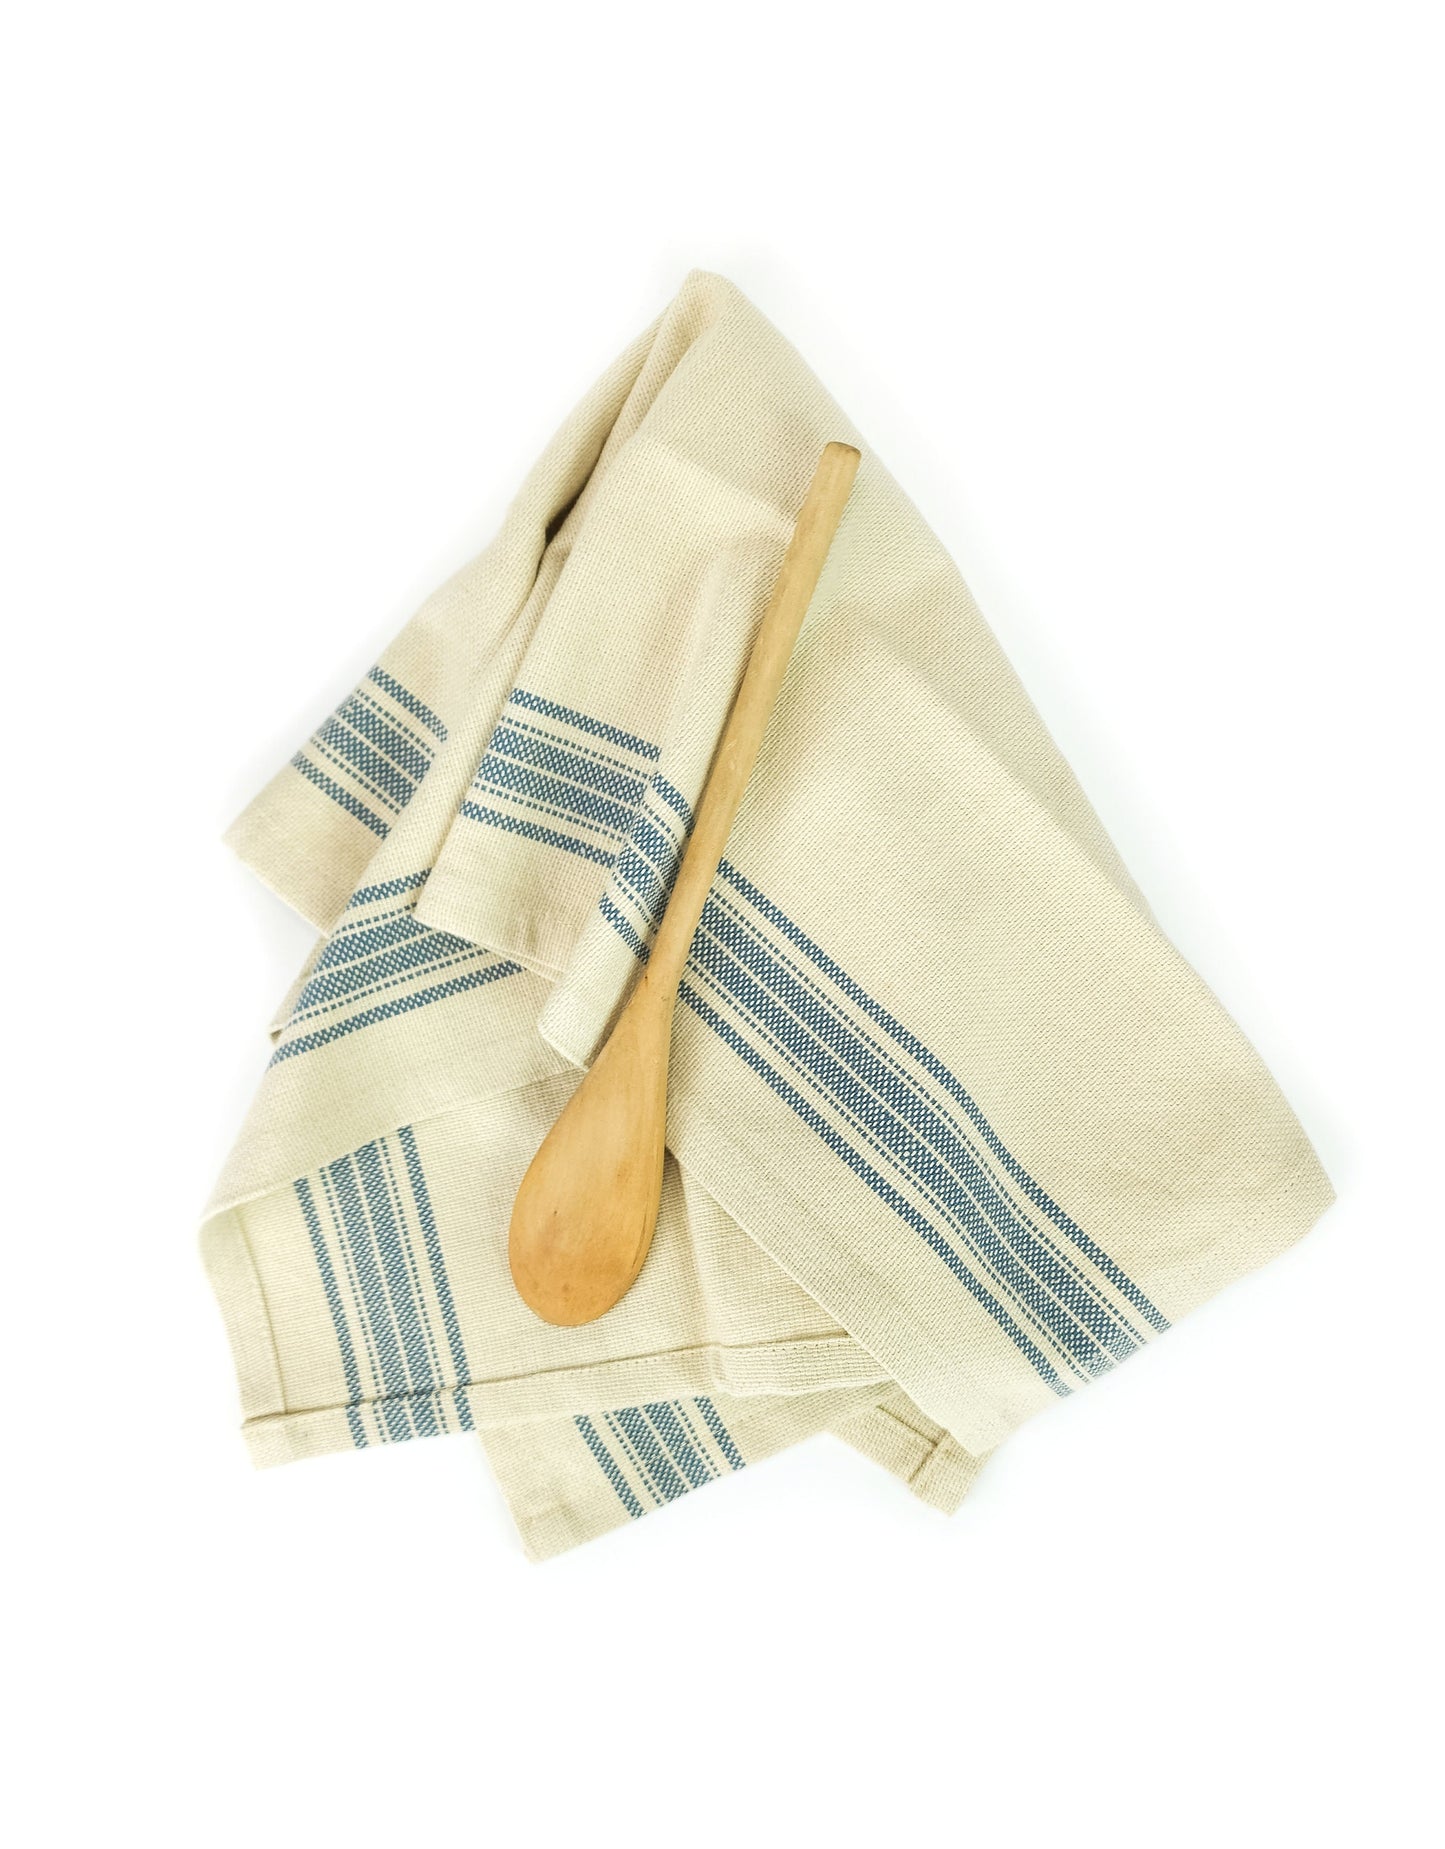 Blue Striped Towel, Light Blue Grain Sack Towel